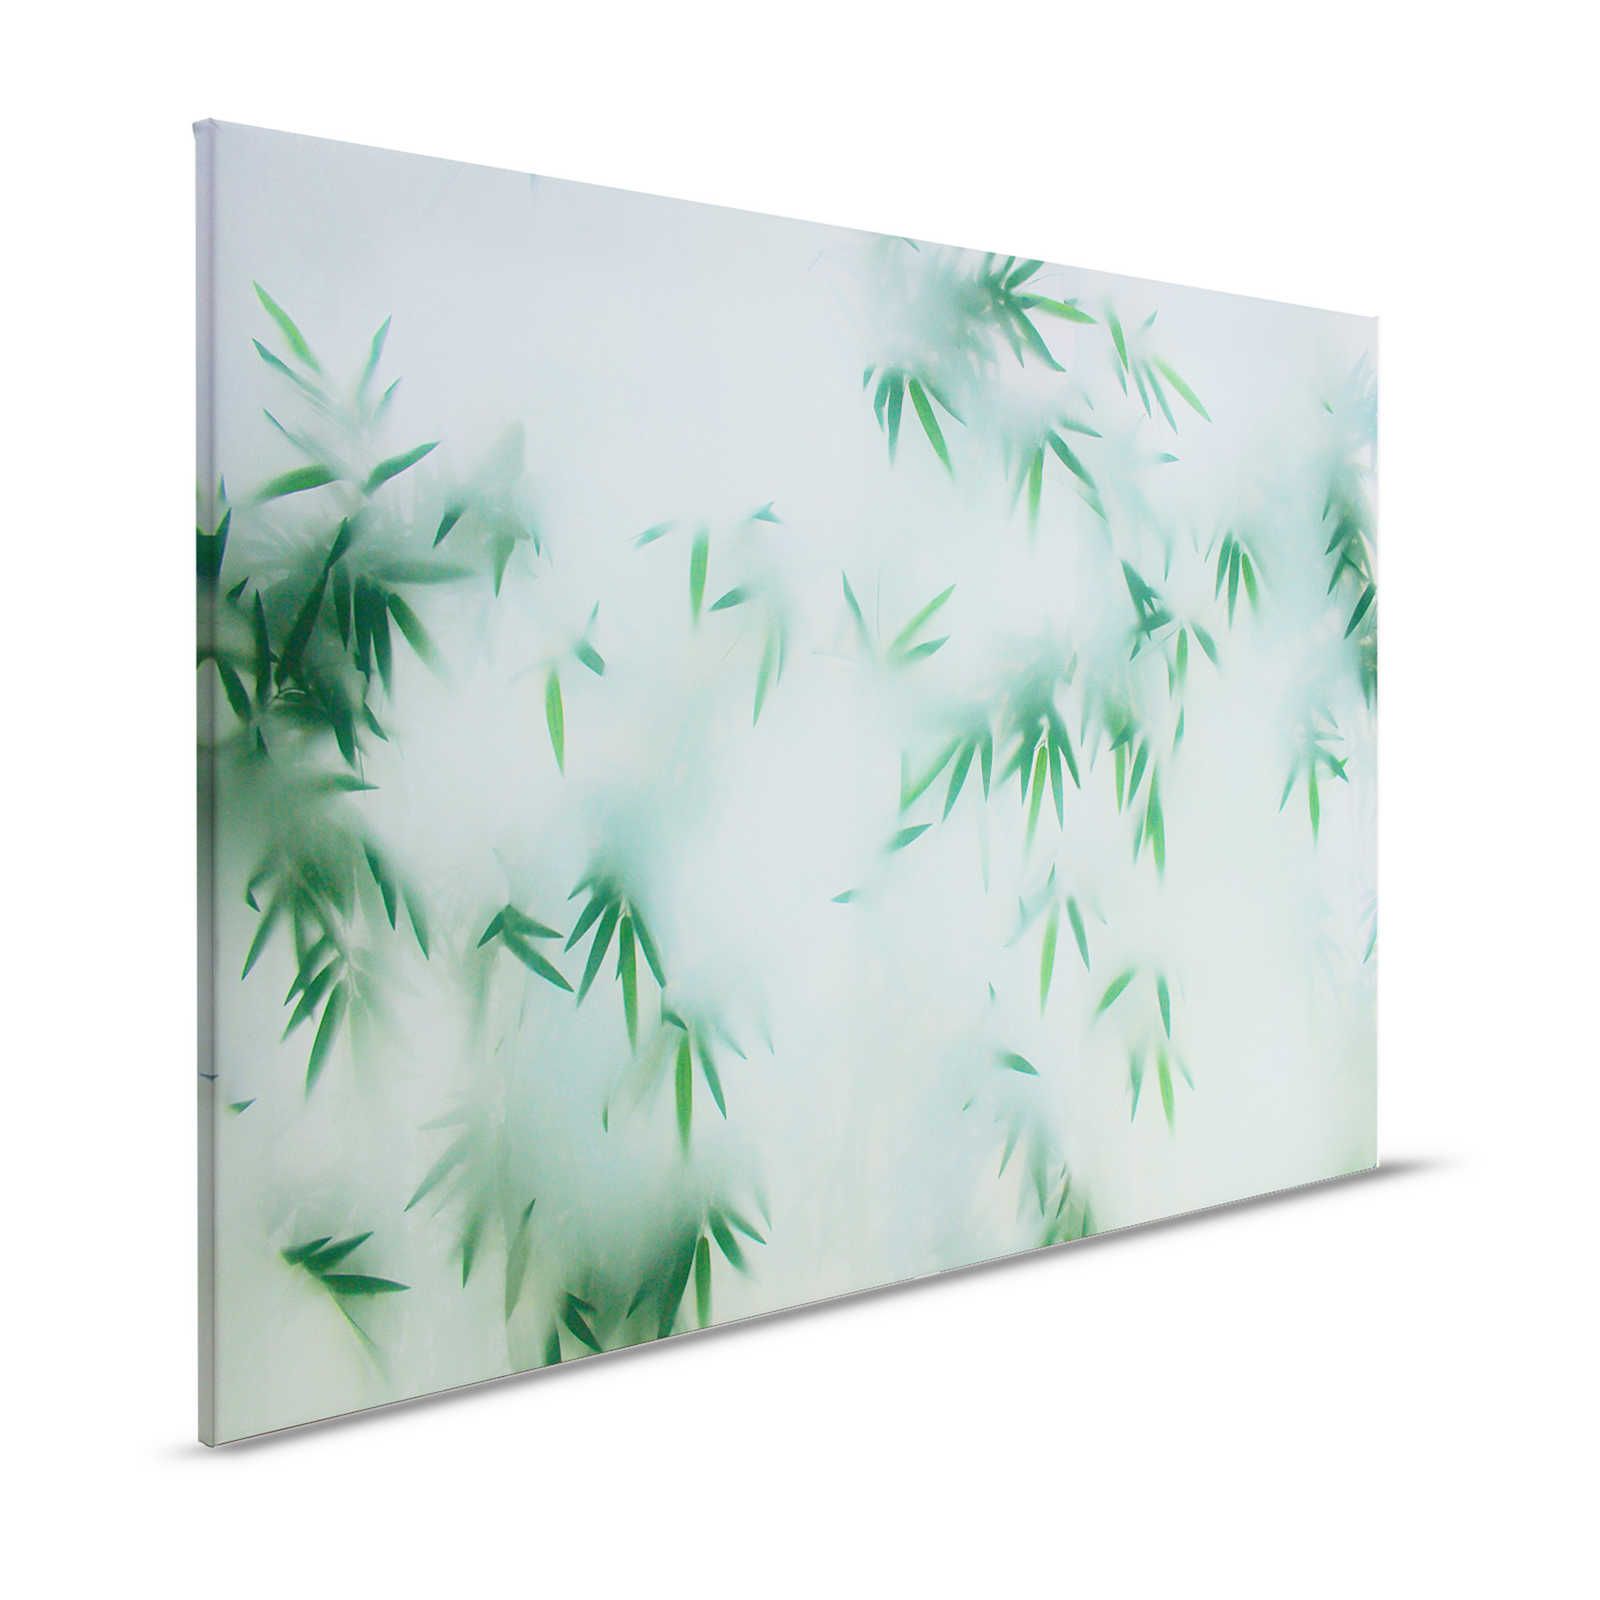 Panda Paradise 1 - Cuadro en lienzo Bambú Hojas verdes en la niebla - 1,20 m x 0,80 m
